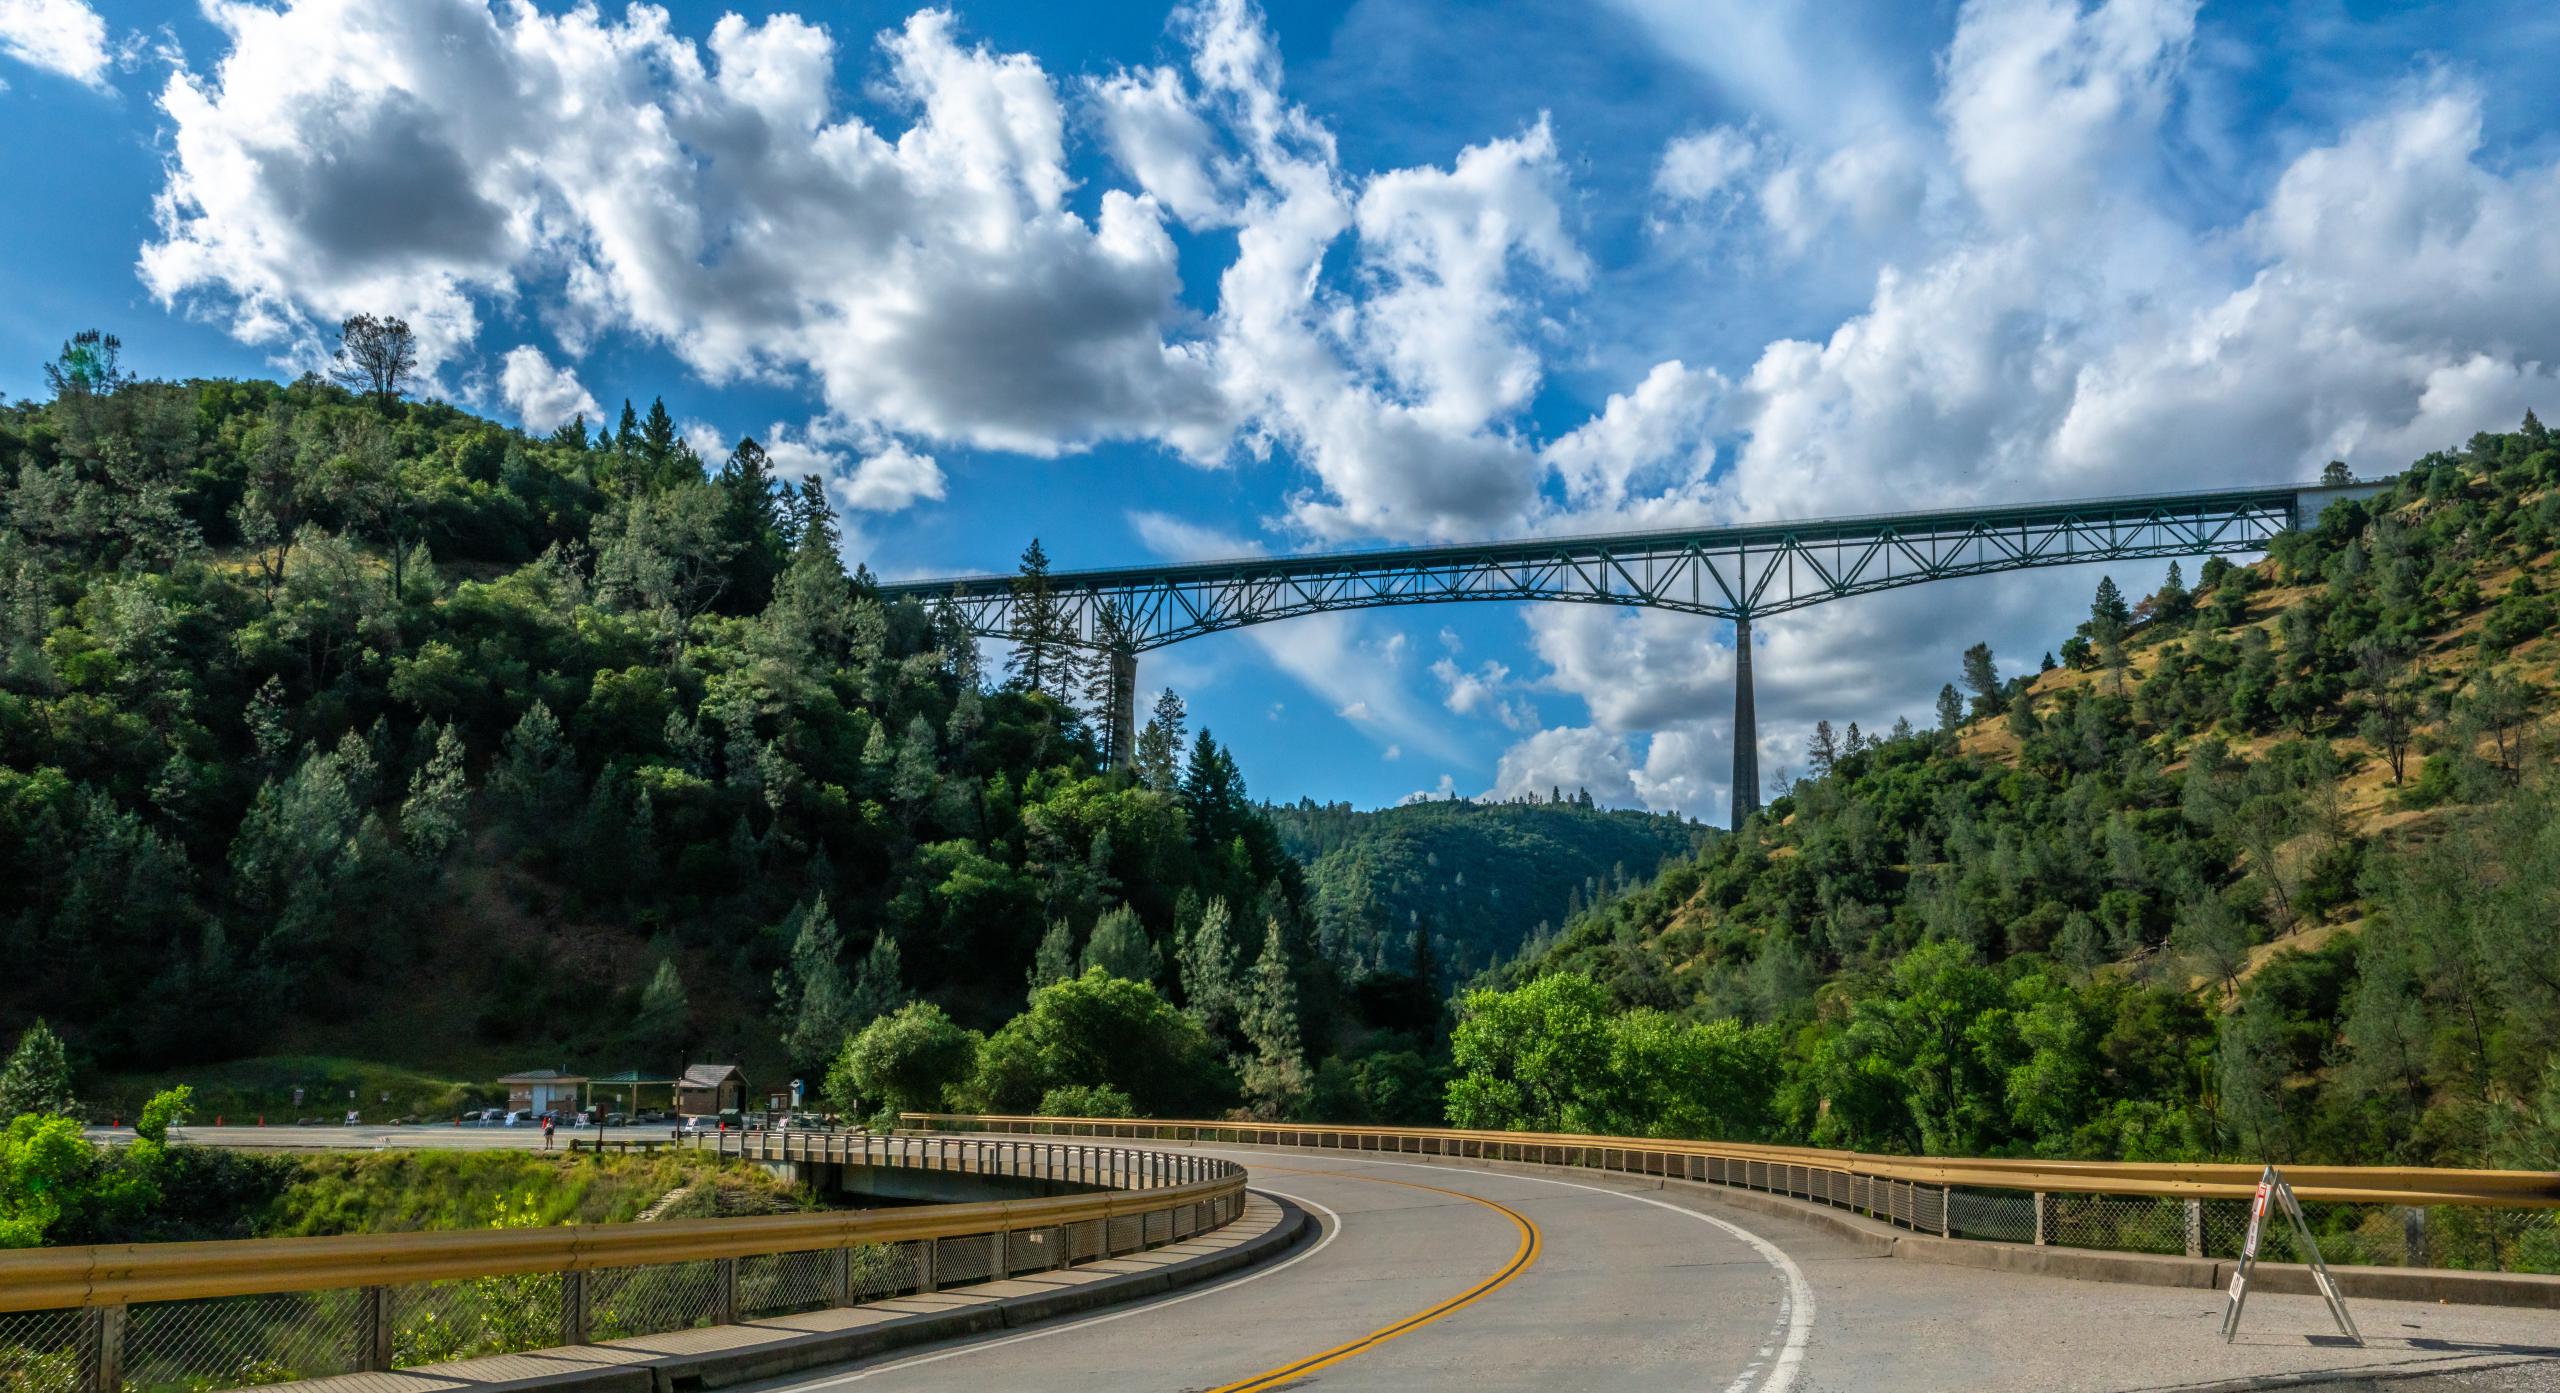 Forest Hill Bridge in Auburn, California